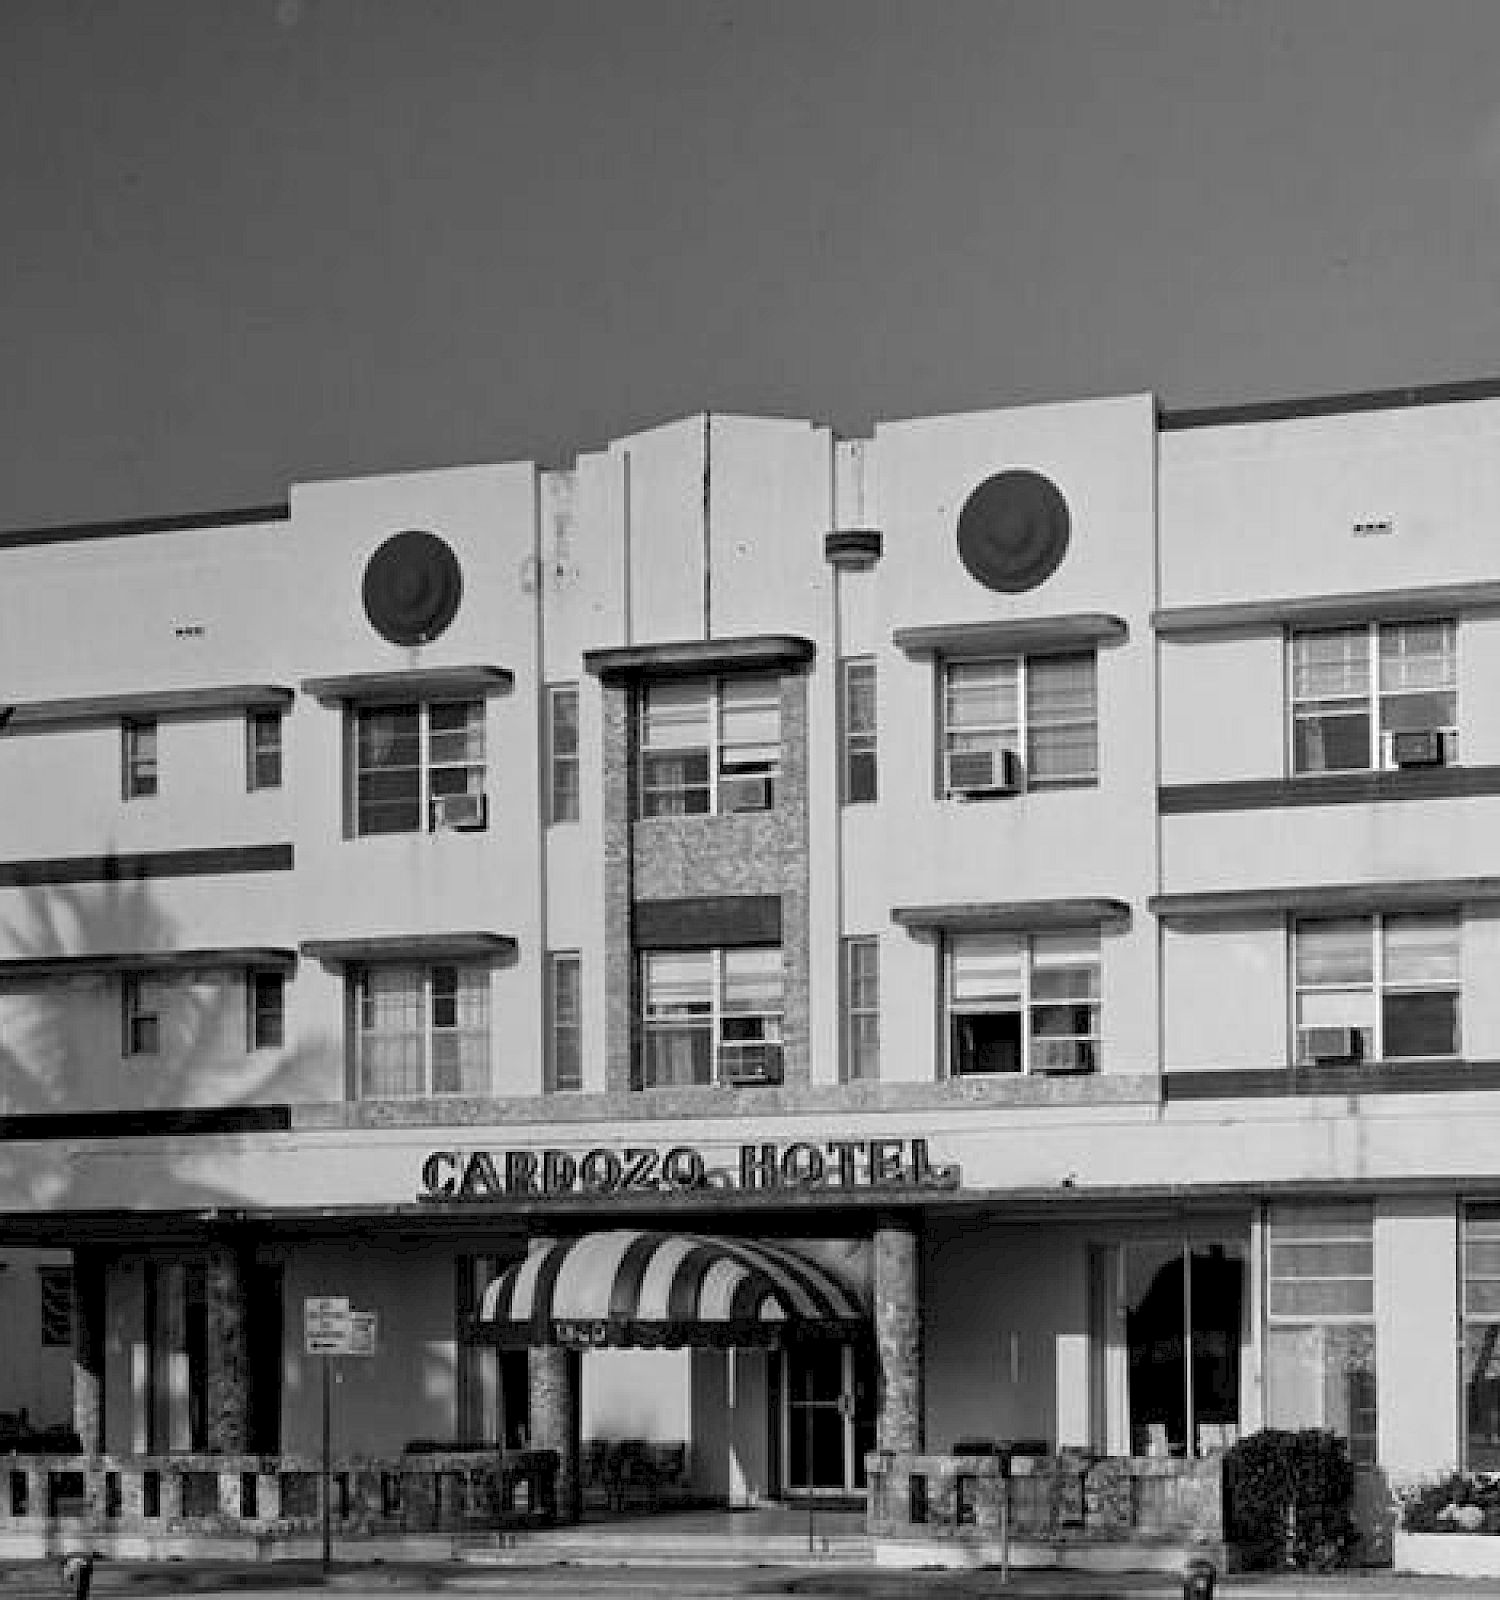 Cardozo Hotel